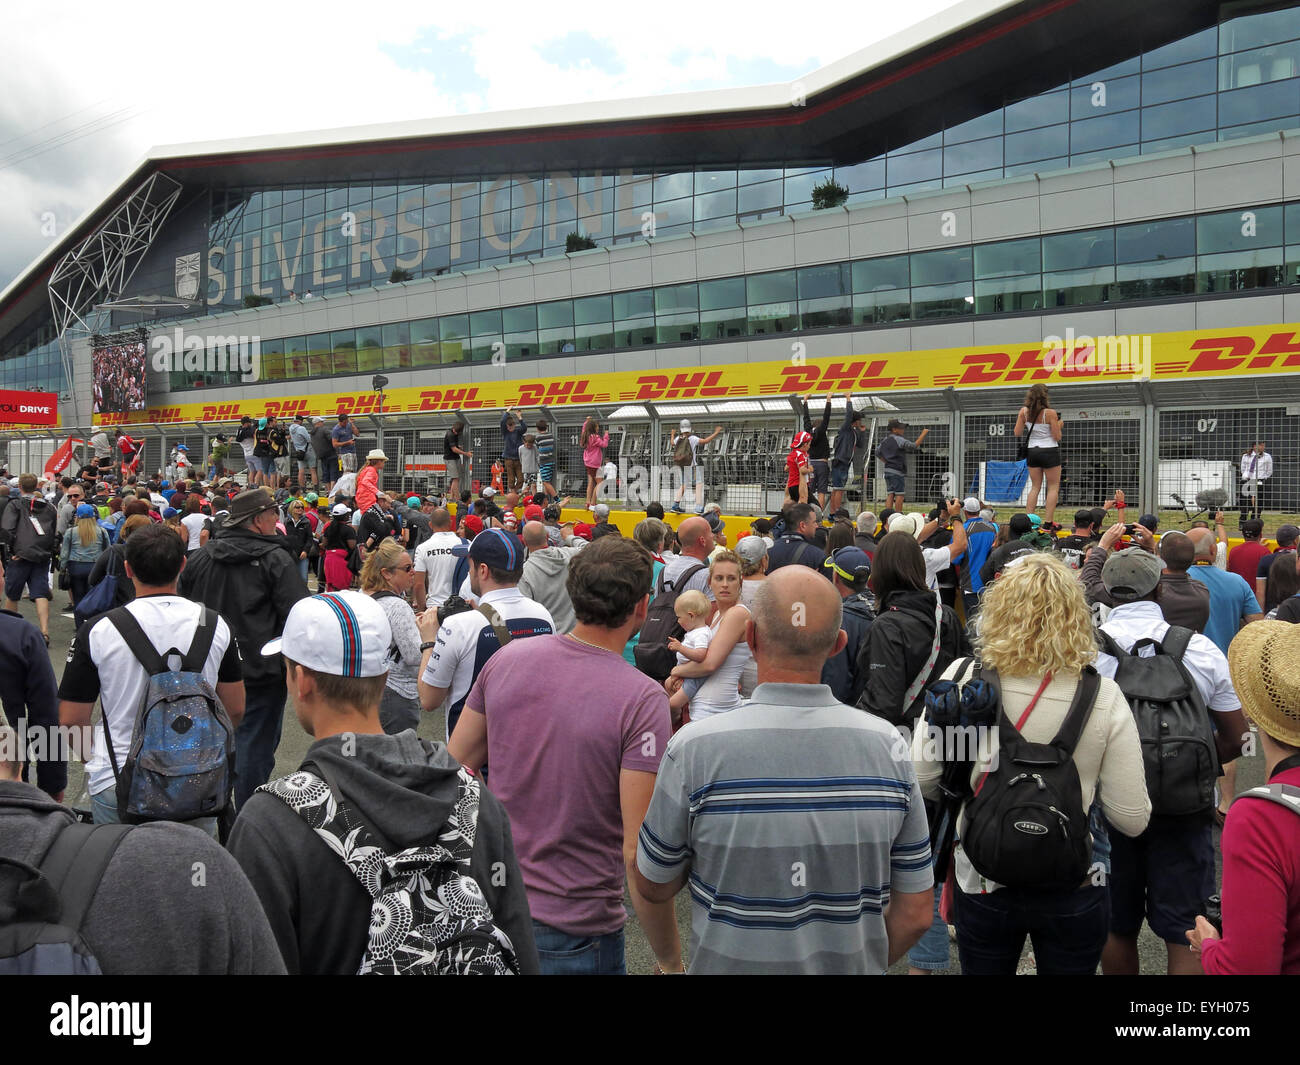 Crowds at Silverstone British Grand Prix F1 Stock Photo